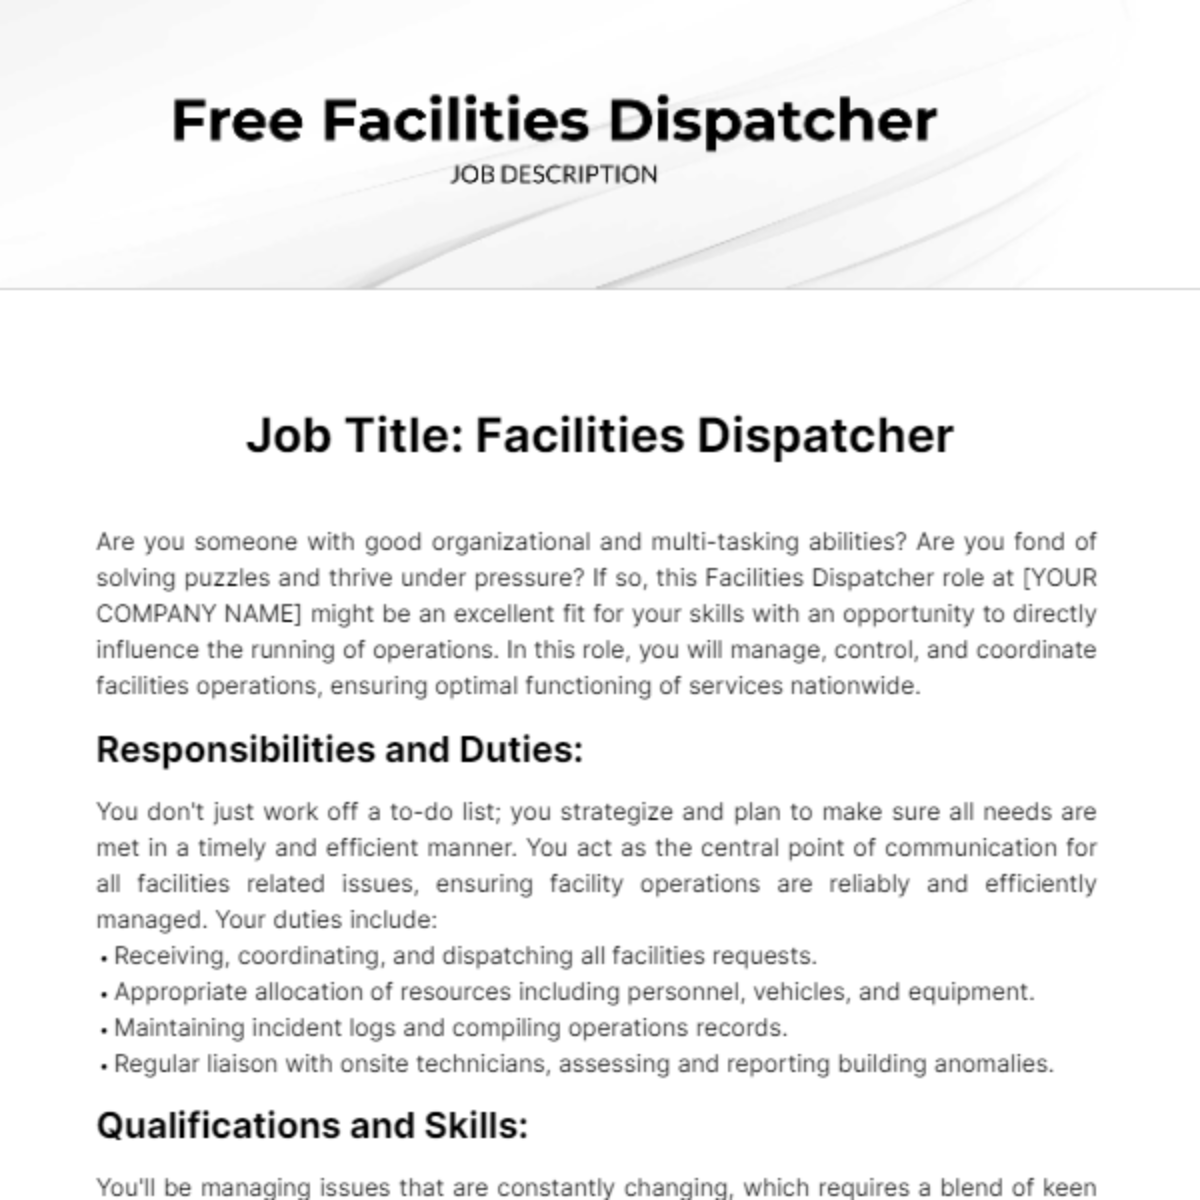 Free Facilities Dispatcher Job Description Template